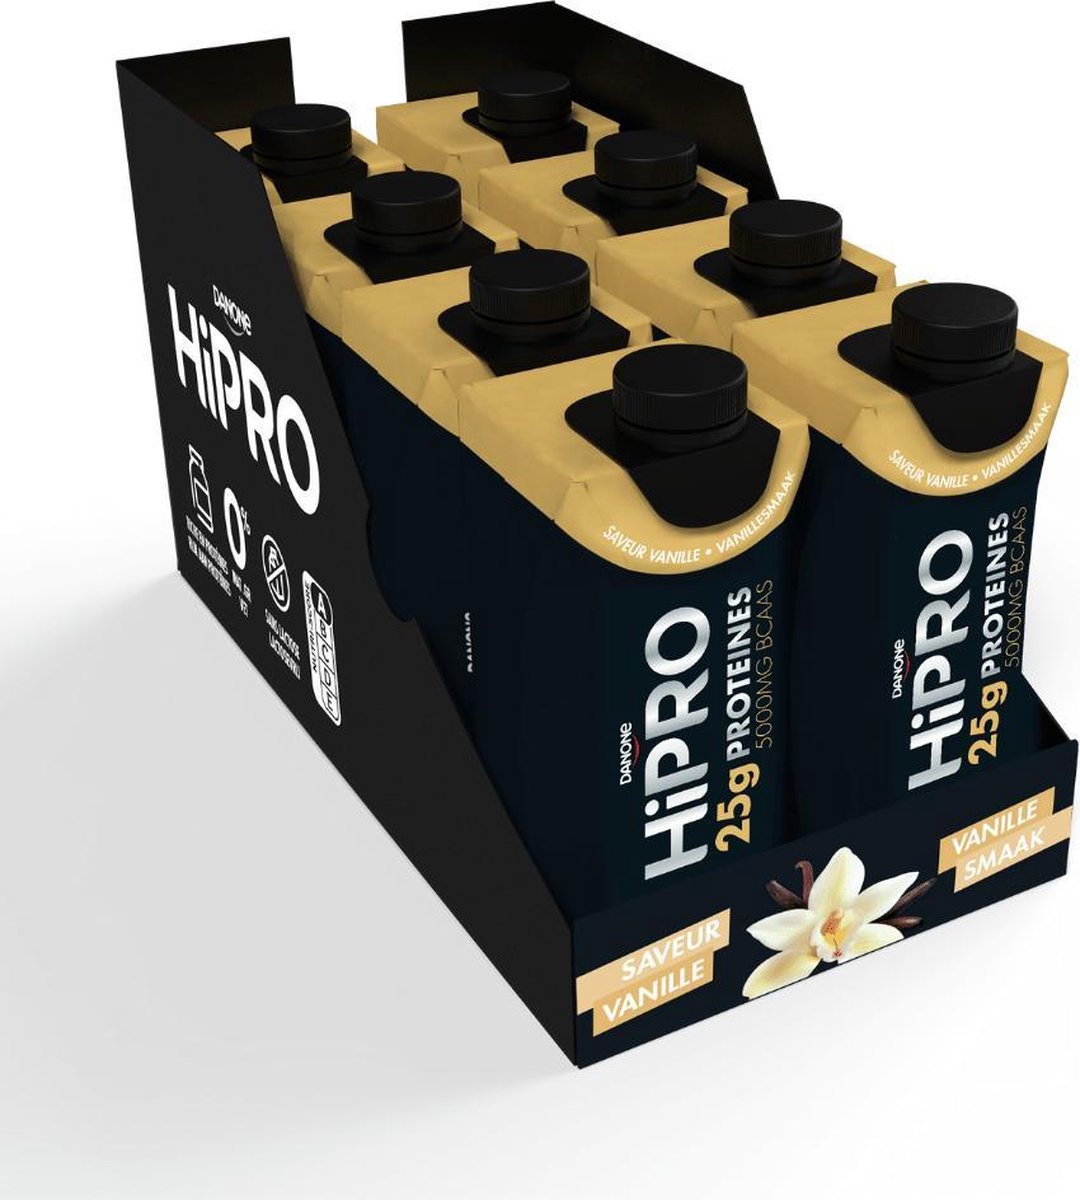 Danone - HiPRO Proteïne Drank Vanille - Eiwitshake / Proteine shake - 25 gram eiwit per fles - 8 stuks (330 ml)